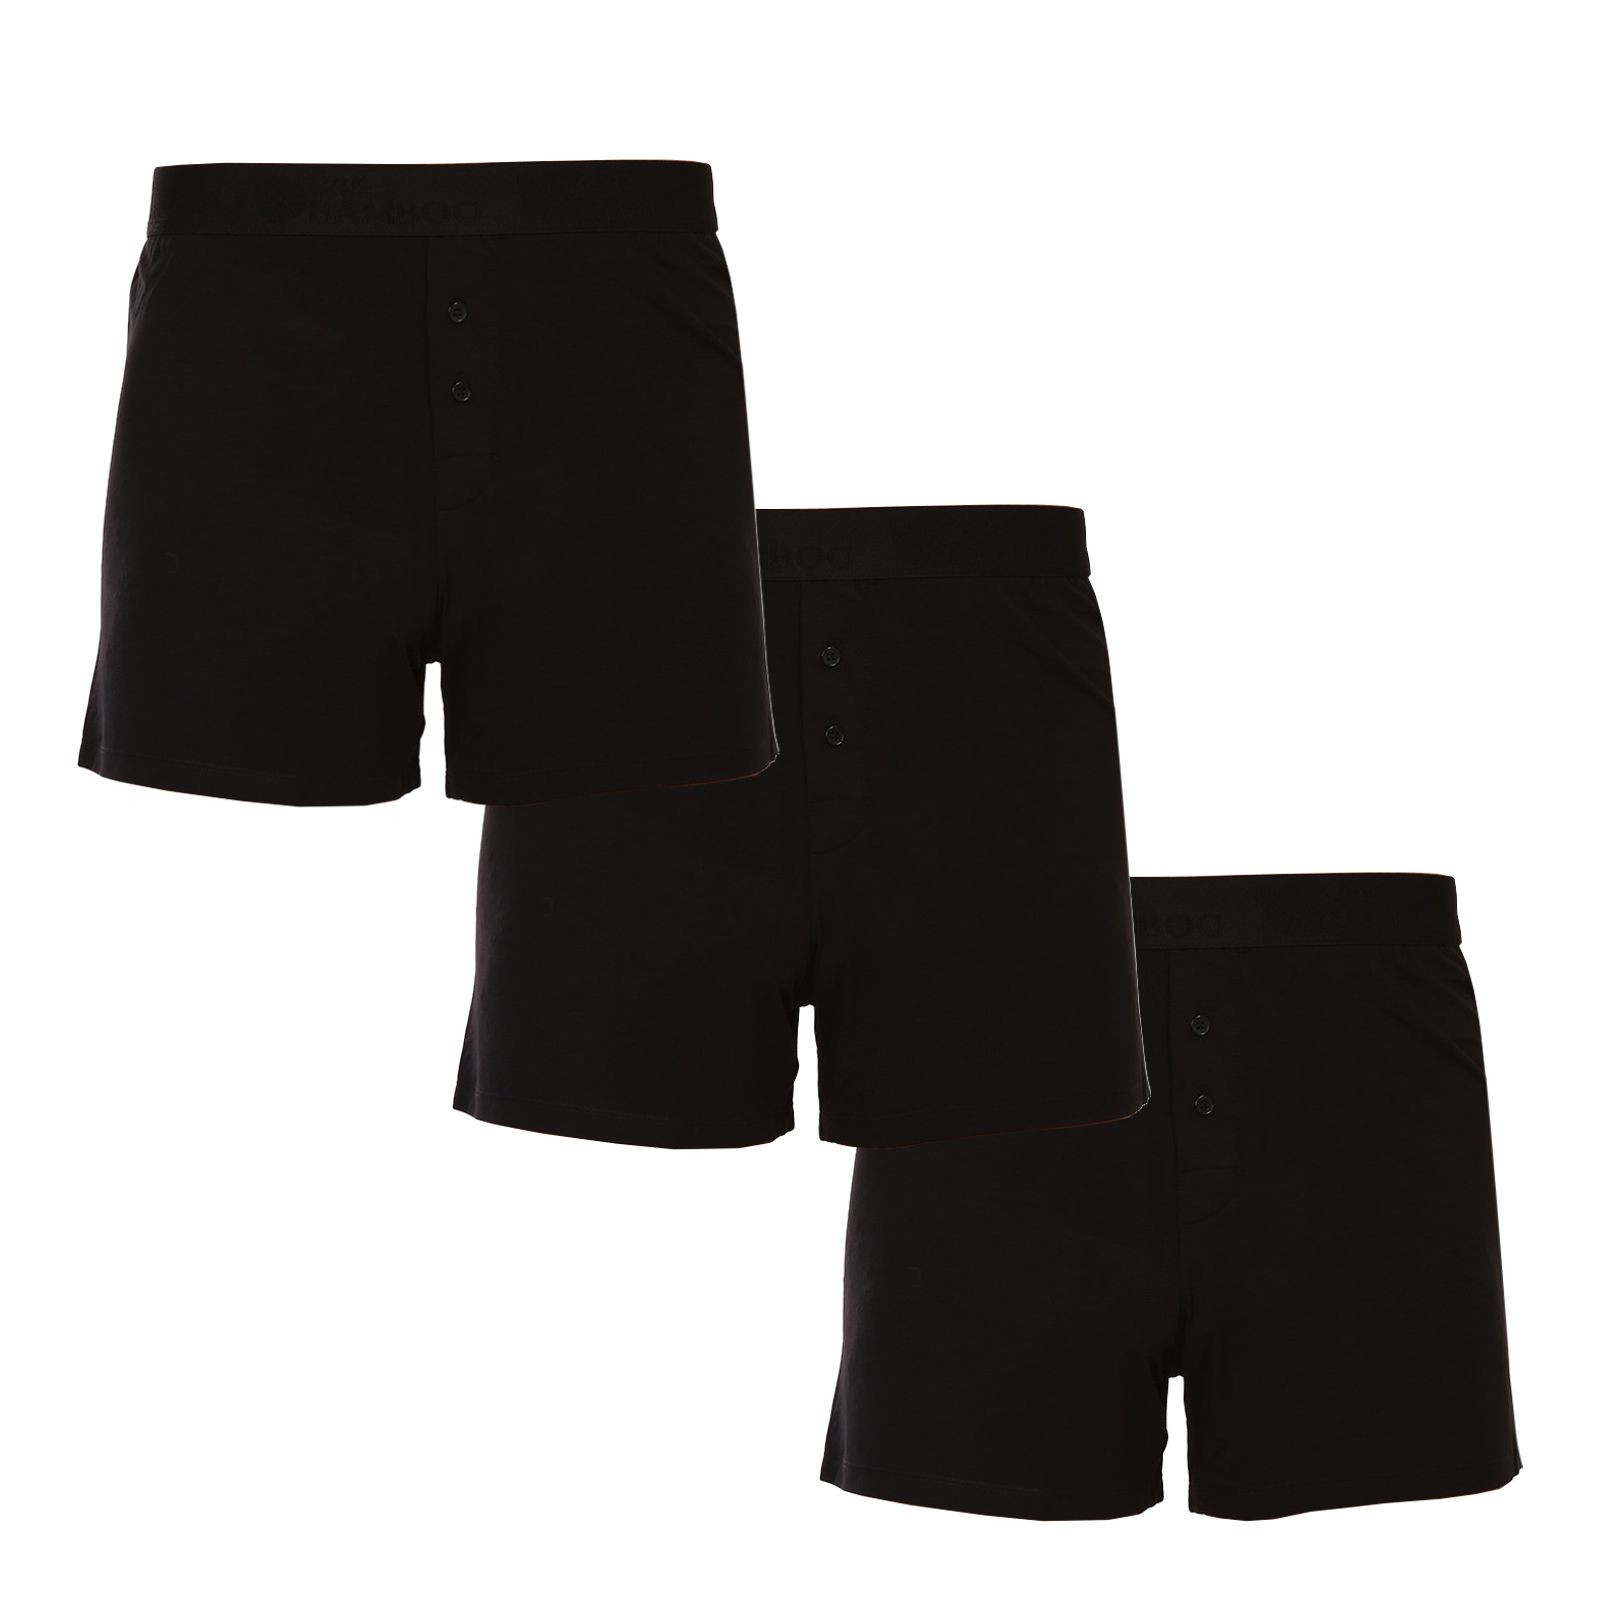 3PACK Men's Shorts Gino bamboo black